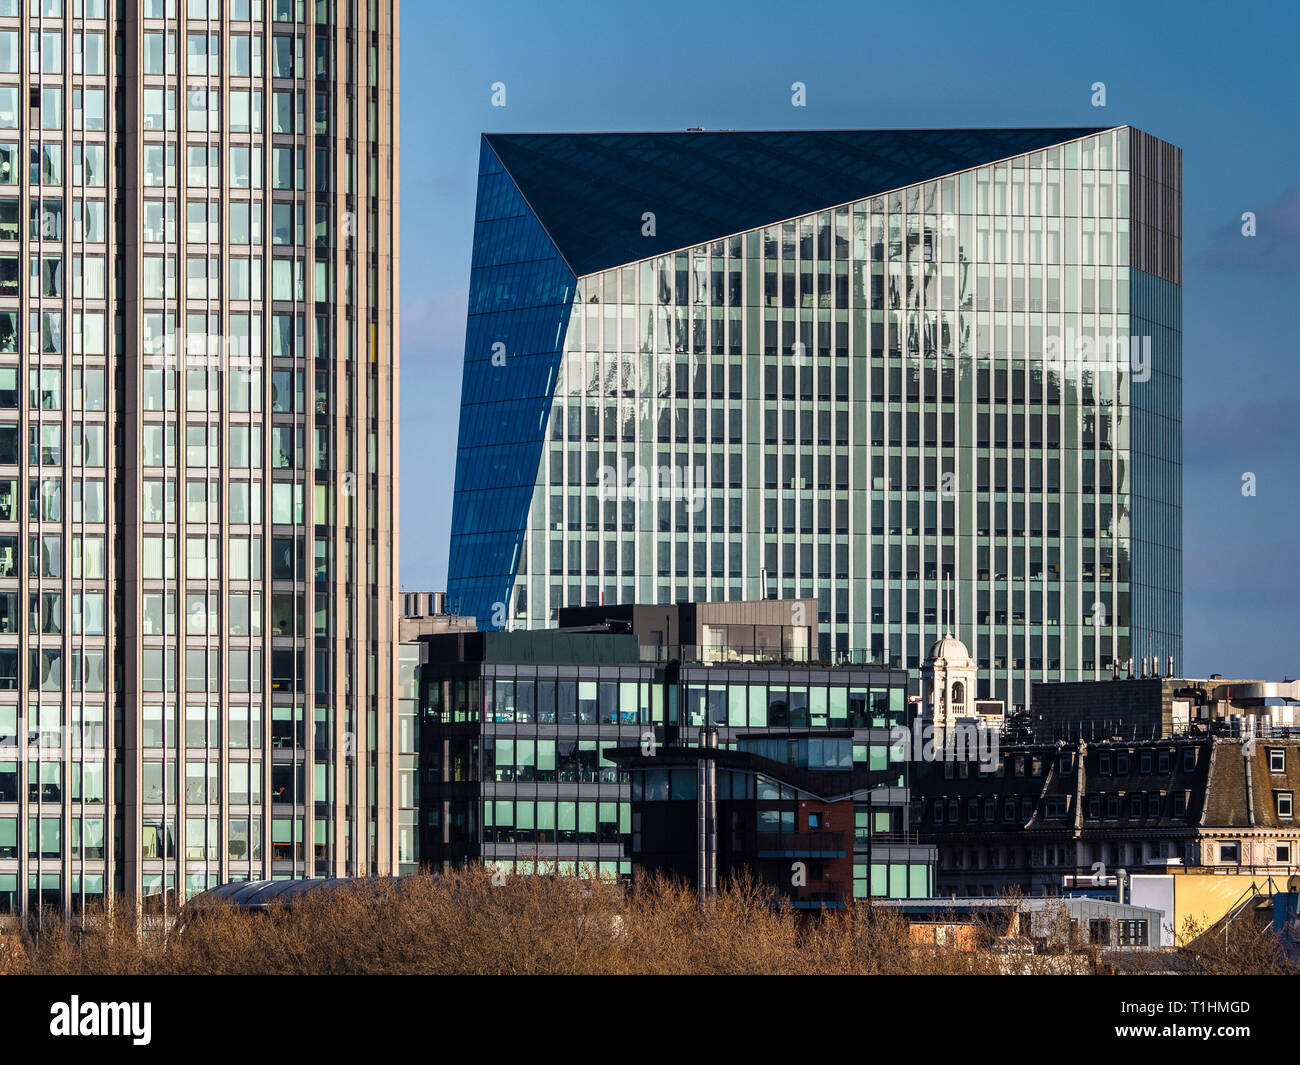 240 Blackfriars Road Building - gemischtes Bürowohnhaus an der Londoner Southbank, Fertigstellung 2014 Architekten Allford Hall Monaghan Morris Stockfoto